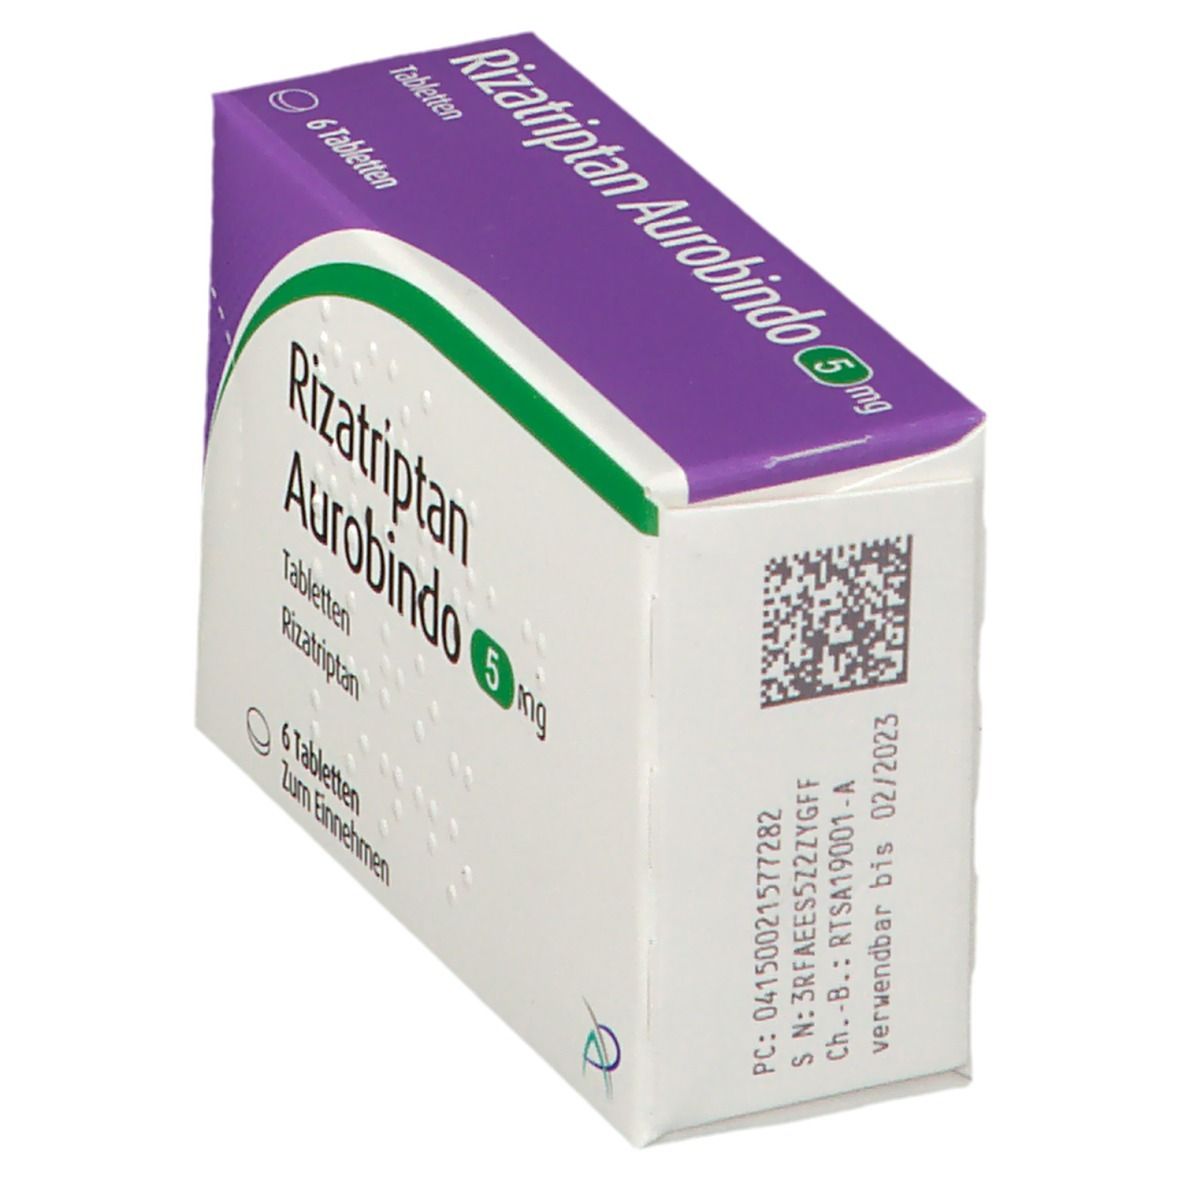 Rizatriptan Aurobindo 5 mg